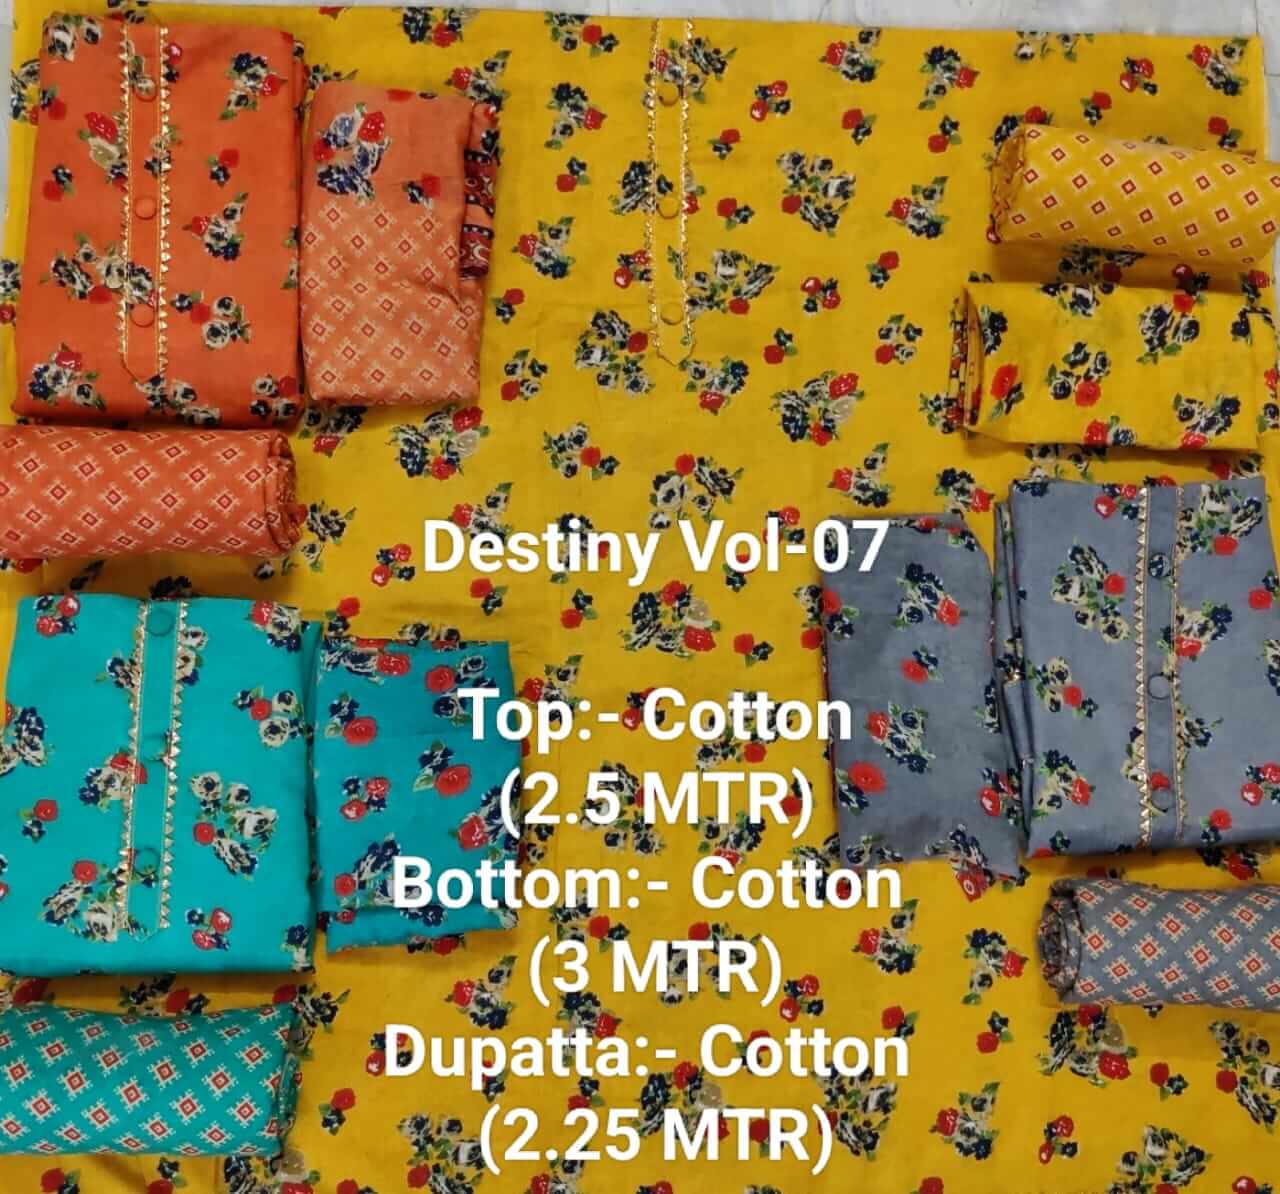 Destiny Vol 7 collection 1